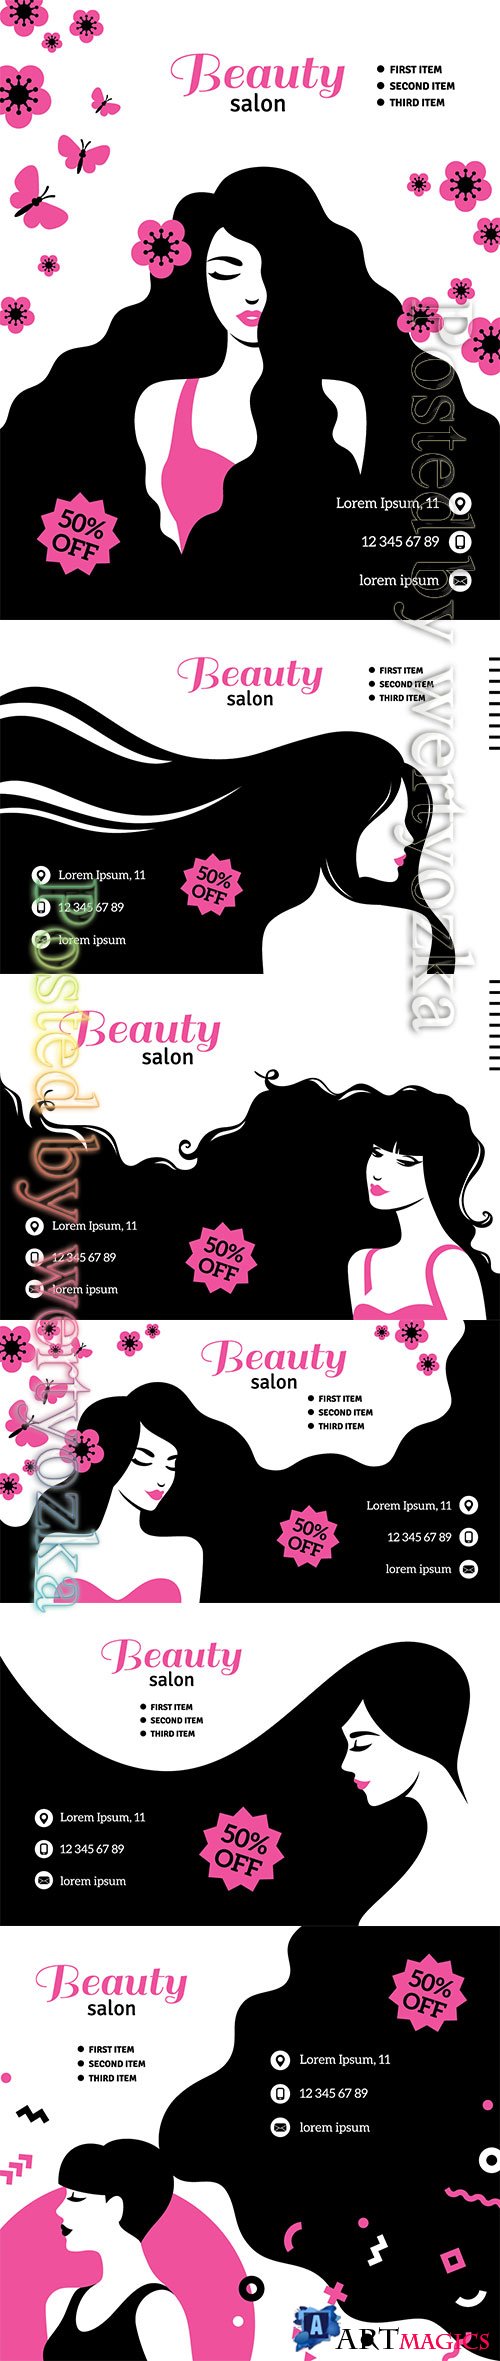 Fashion woman card template, beauty salon